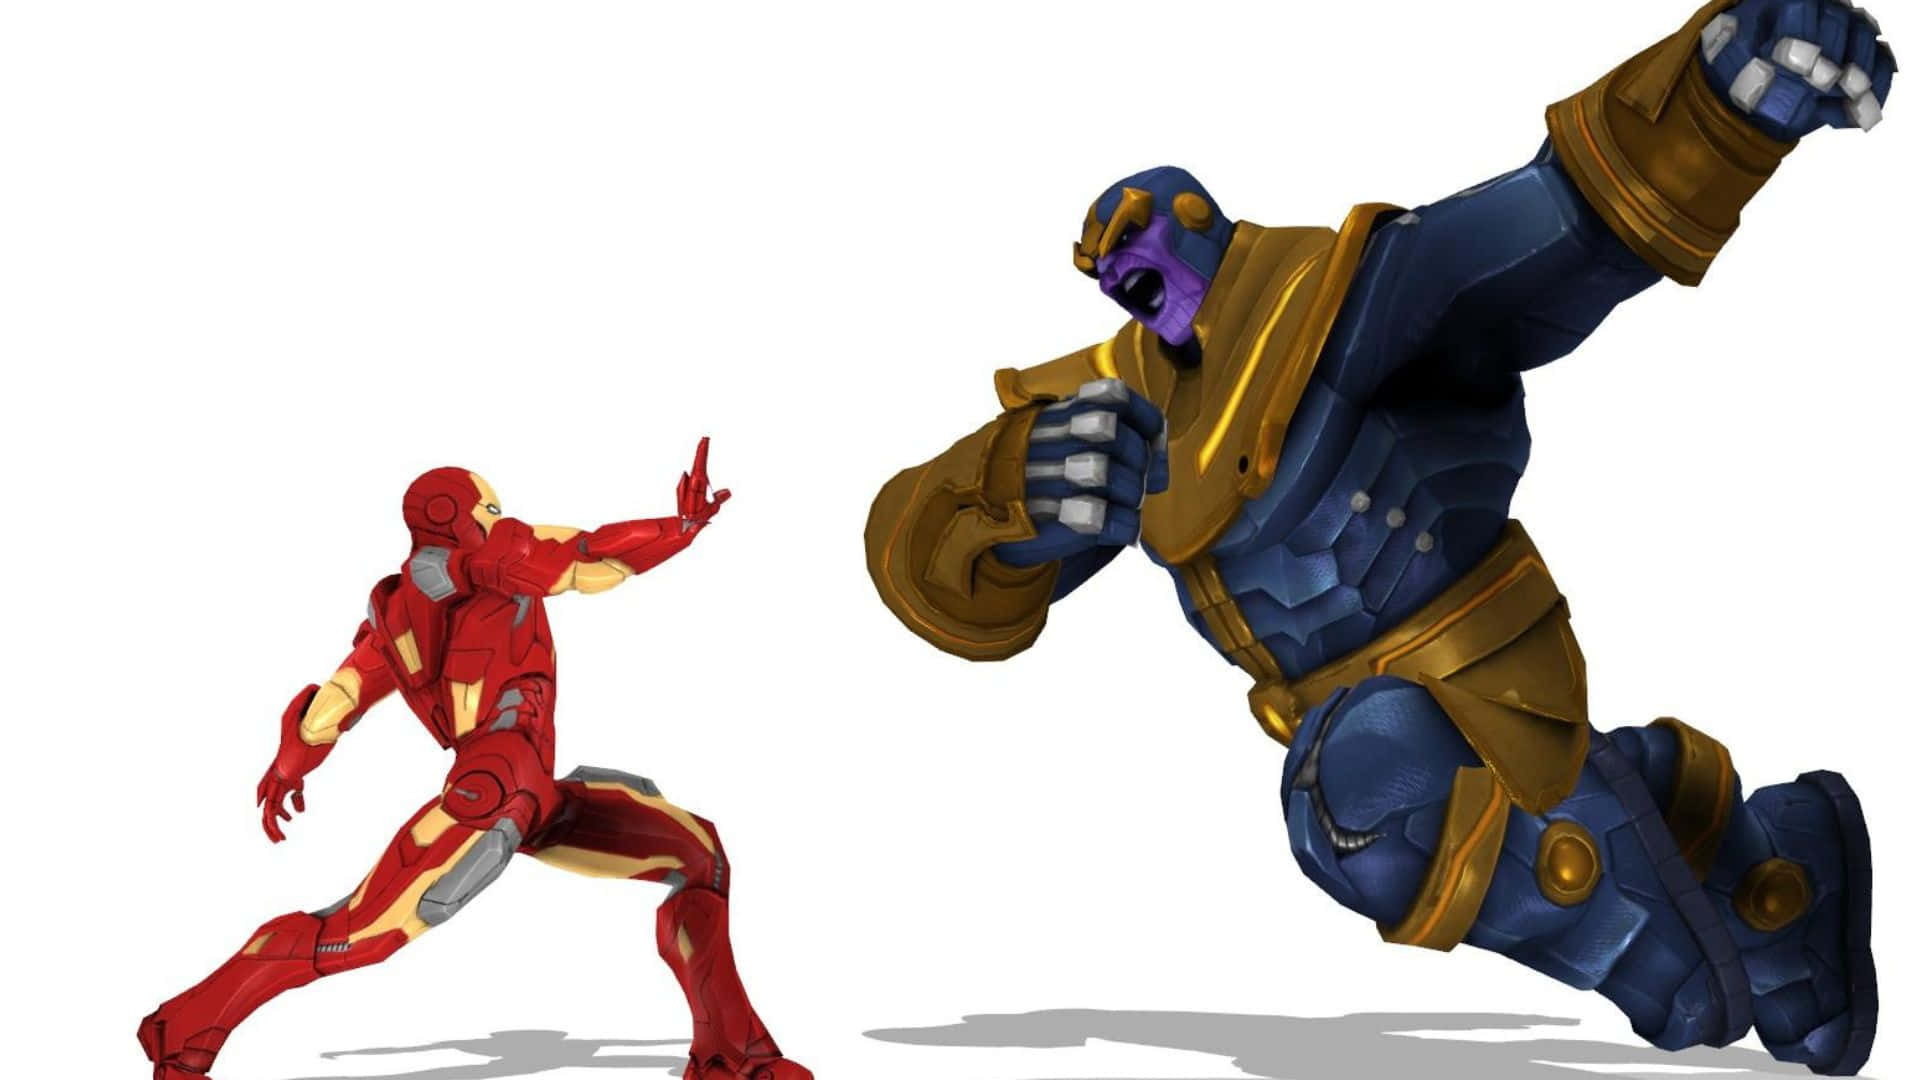 Iron Man goes head-to-head with Thanos in an epic superhero showdown" Wallpaper